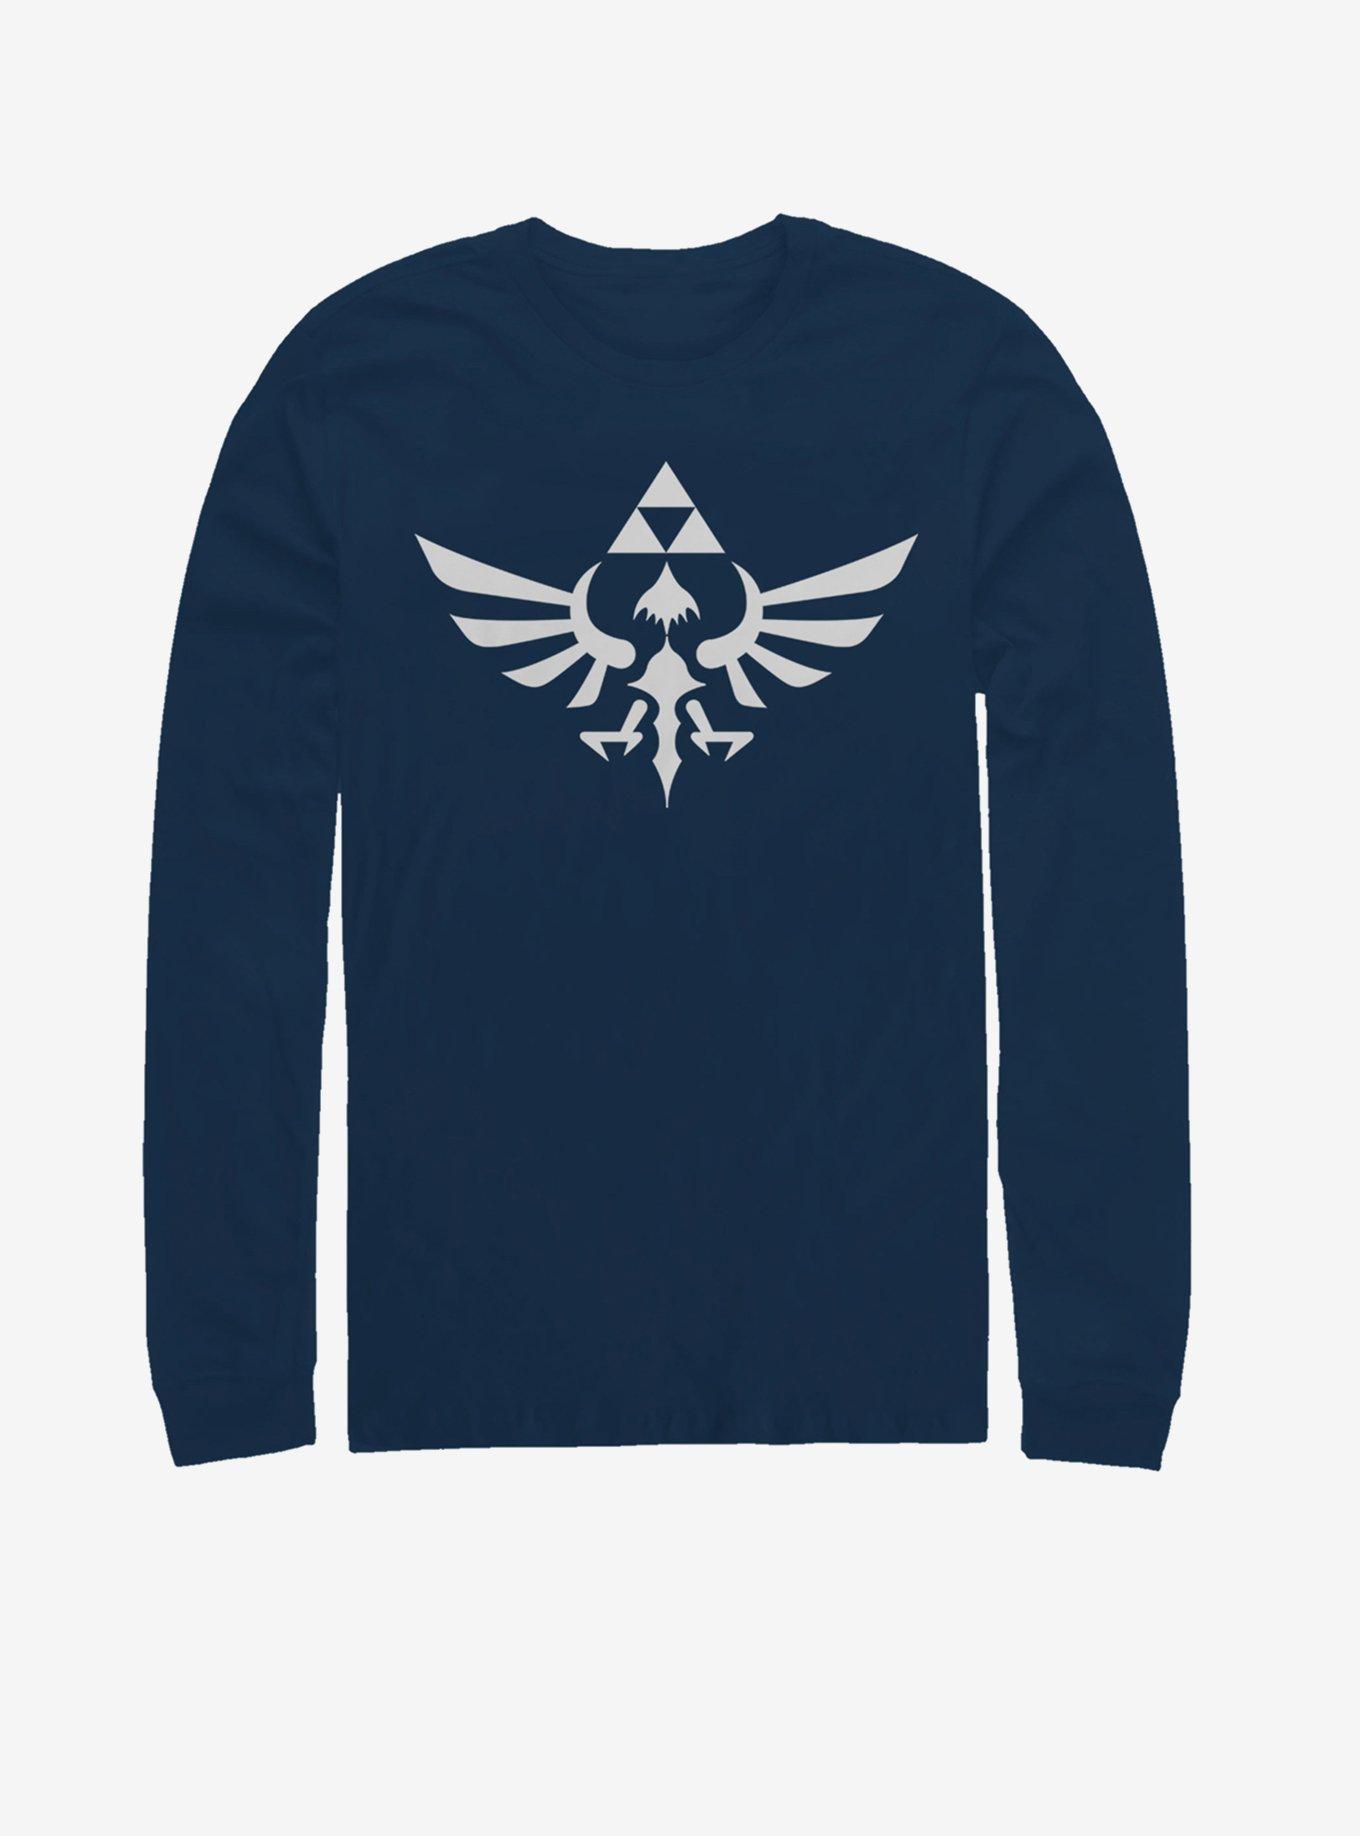 Legend of Zelda Triumphant Triforce Long-Sleeve T-Shirt, NAVY, hi-res